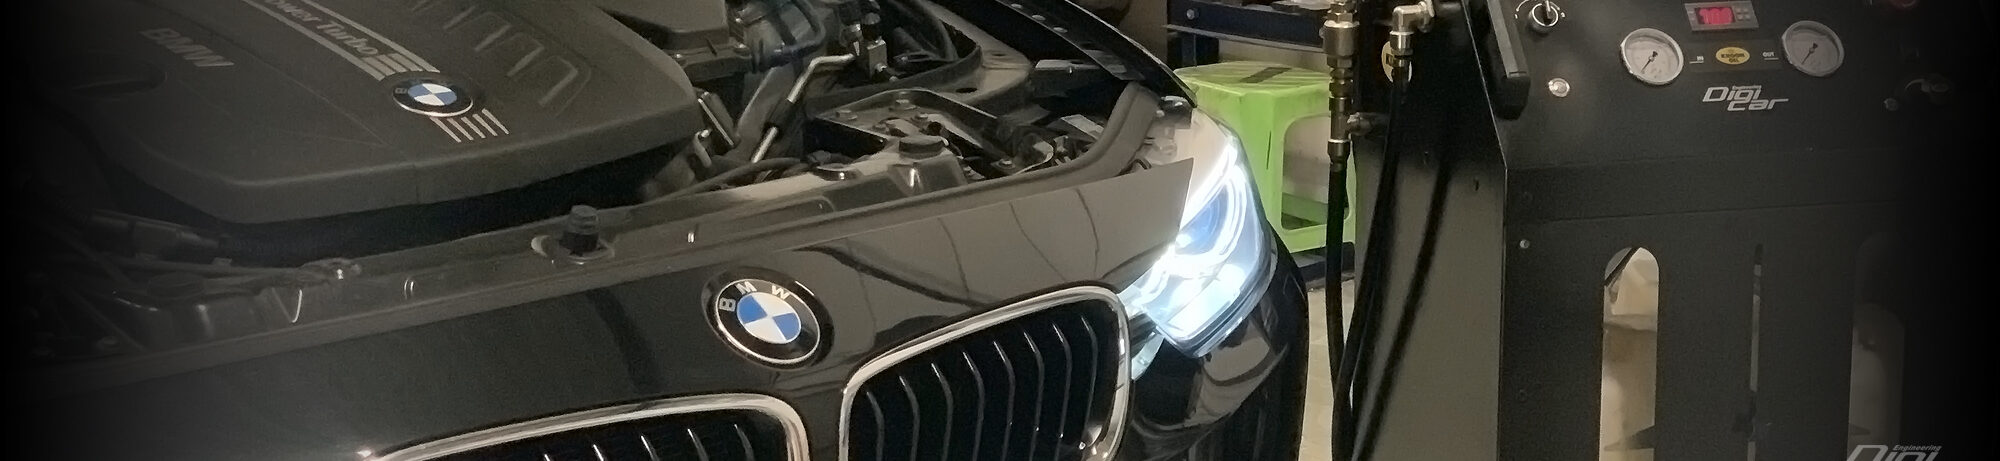 Ga terug Stad bloem Goed doen BMW Automaat Spoelen Flushen | Uniek stappenplan | Digicar Engineering -  Digicar